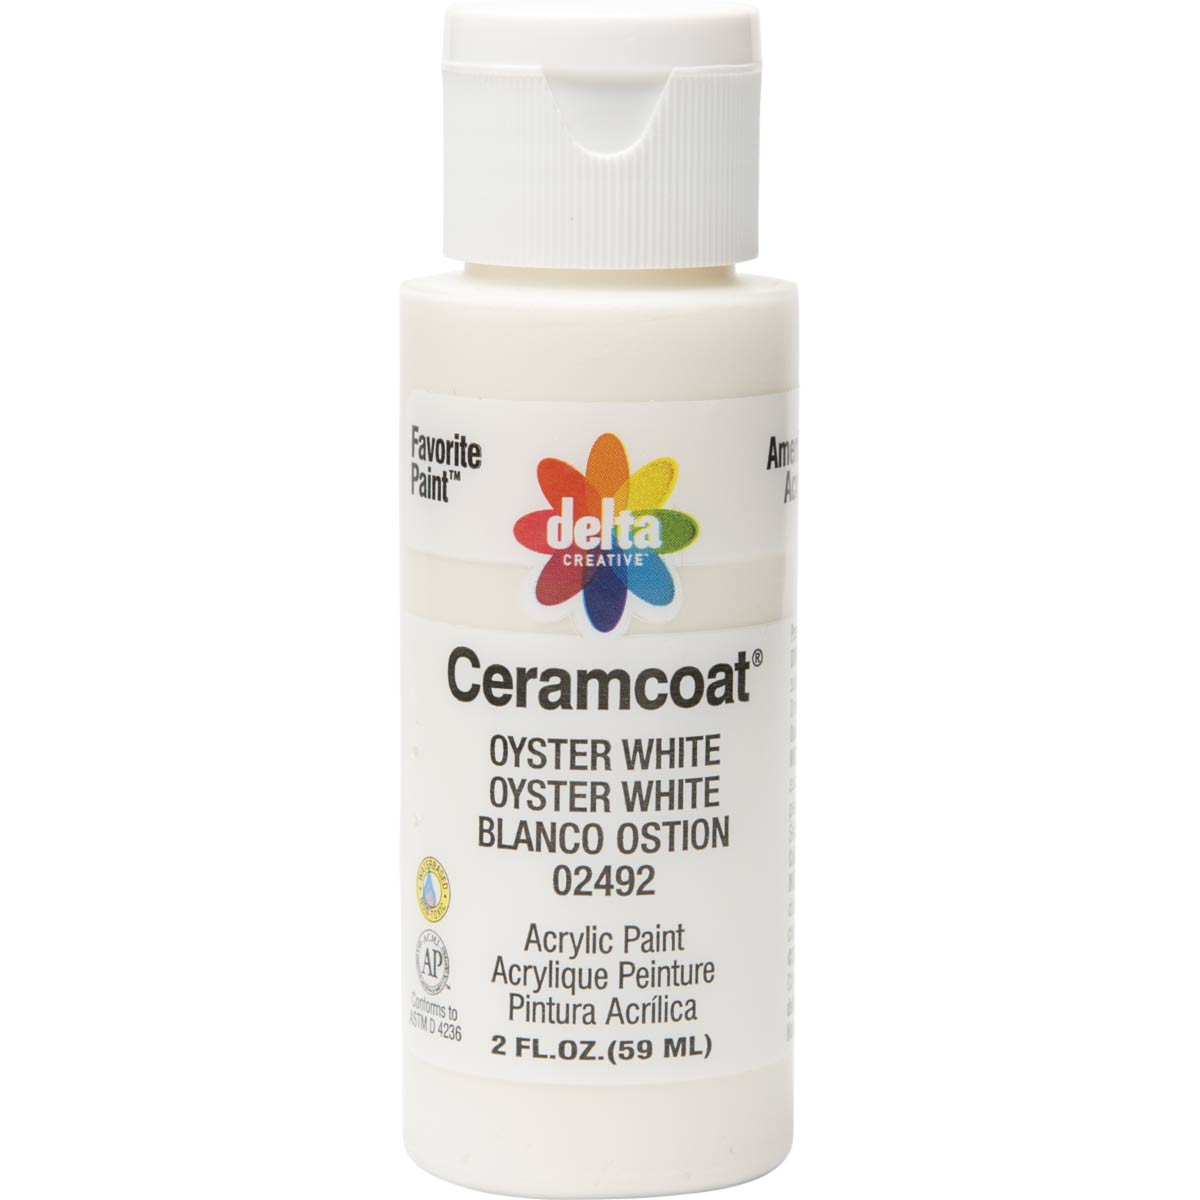 Delta Ceramcoat Acrylic Paint - Oyster White, 2 oz. - 024920202W